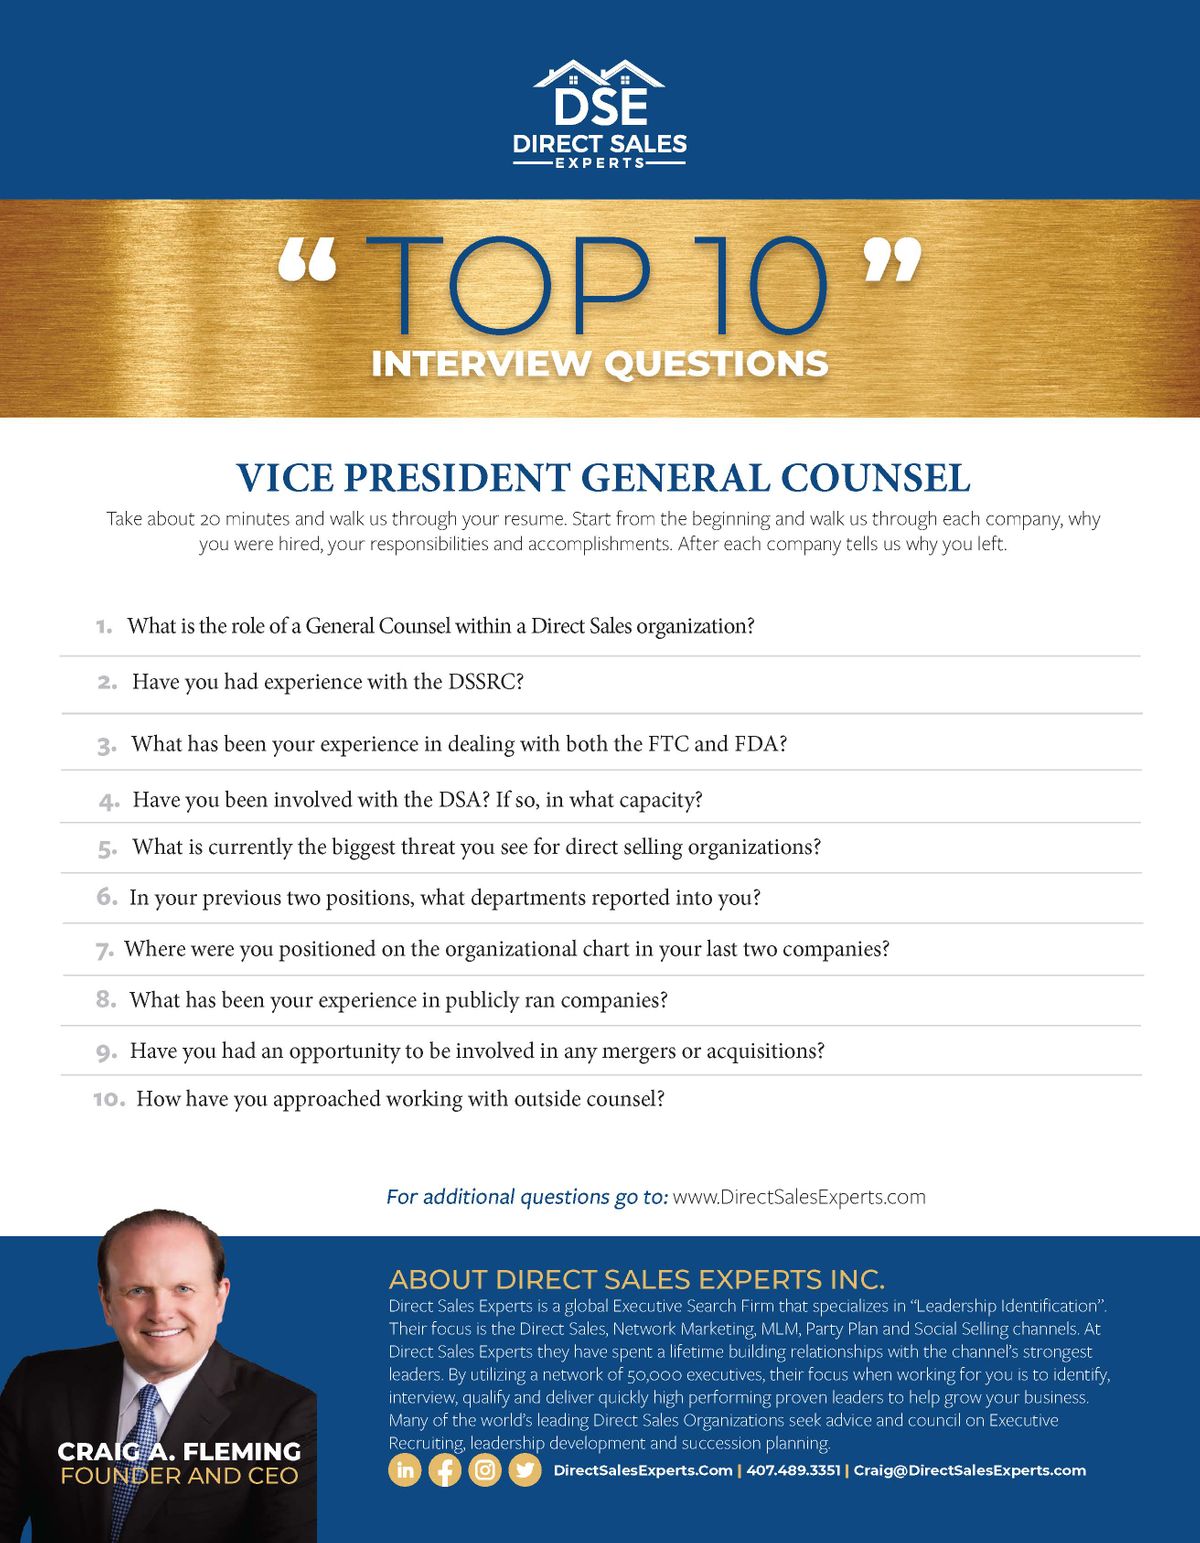 DirectSalesExperts_Top10-VicePresidentGeneralCounsel-JPEG_Page_1 (1).jpg